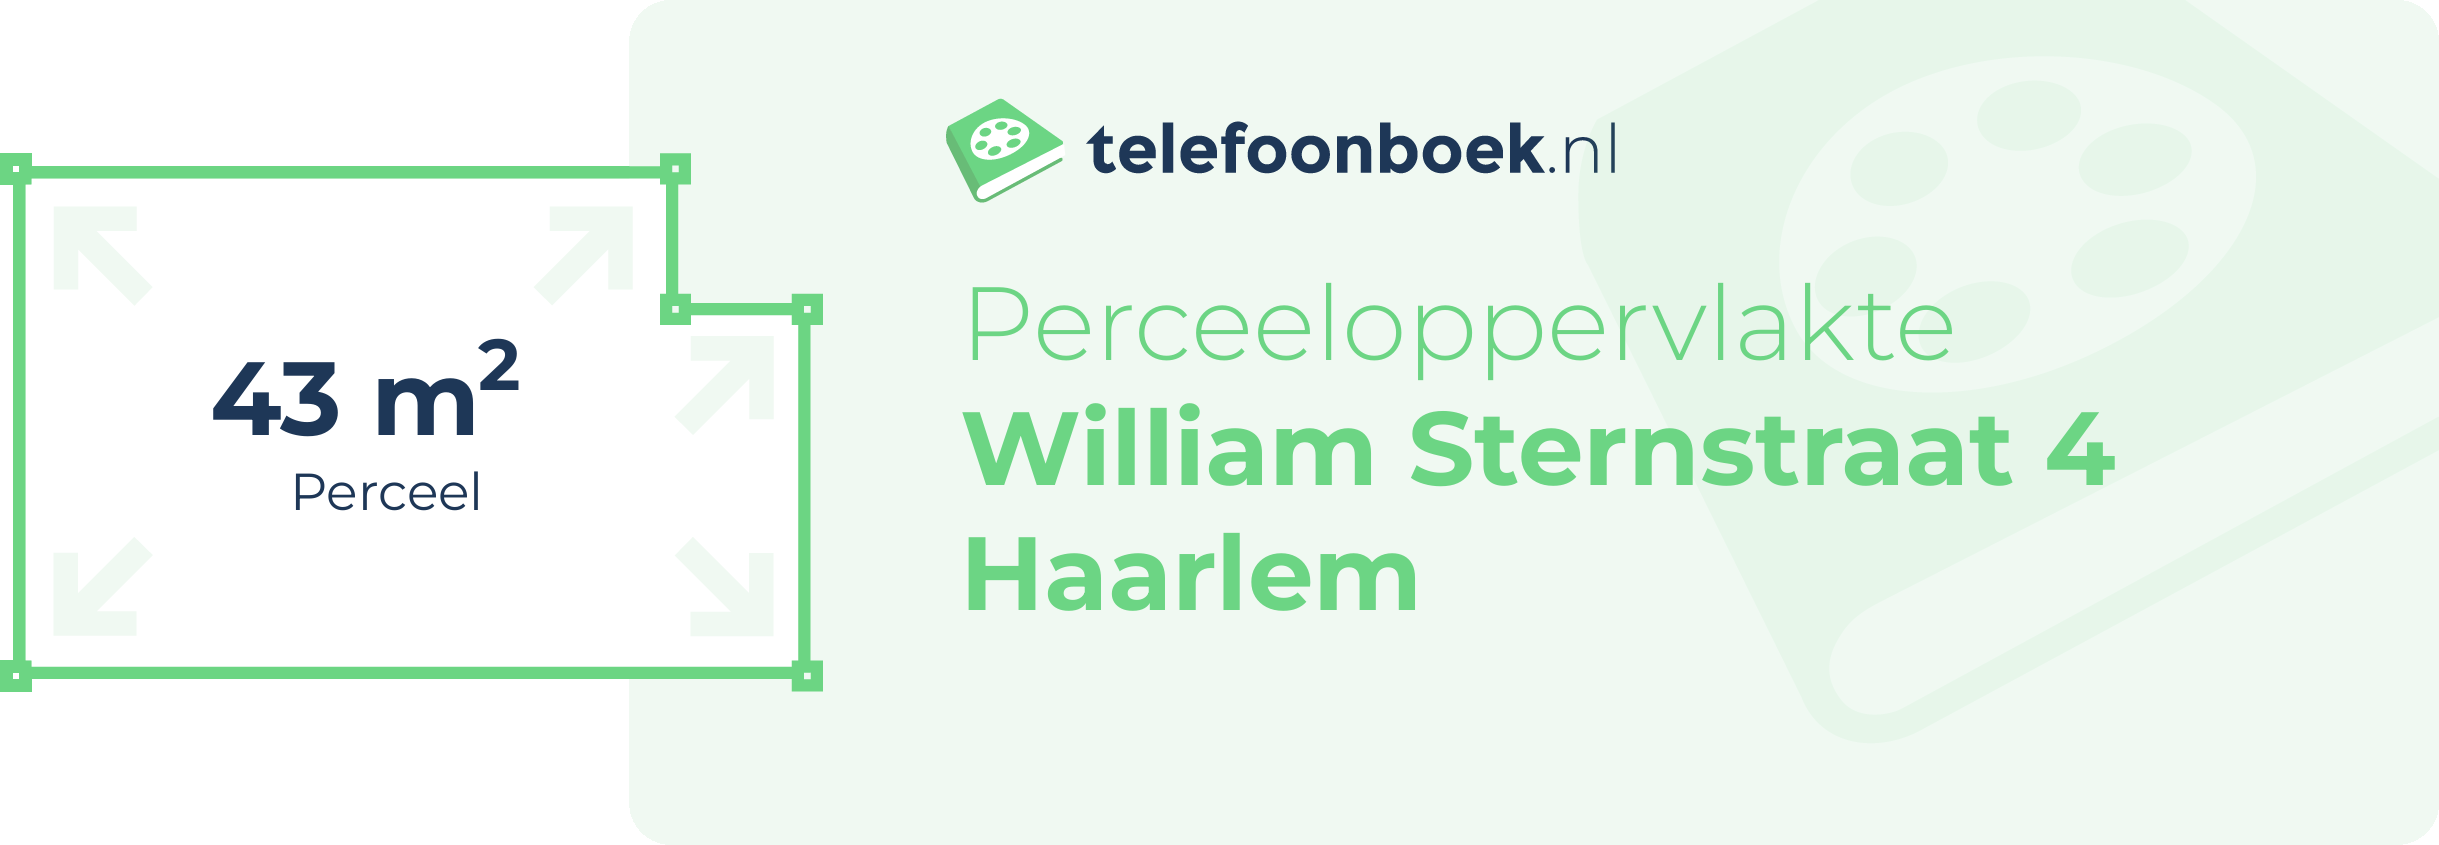 Perceeloppervlakte William Sternstraat 4 Haarlem